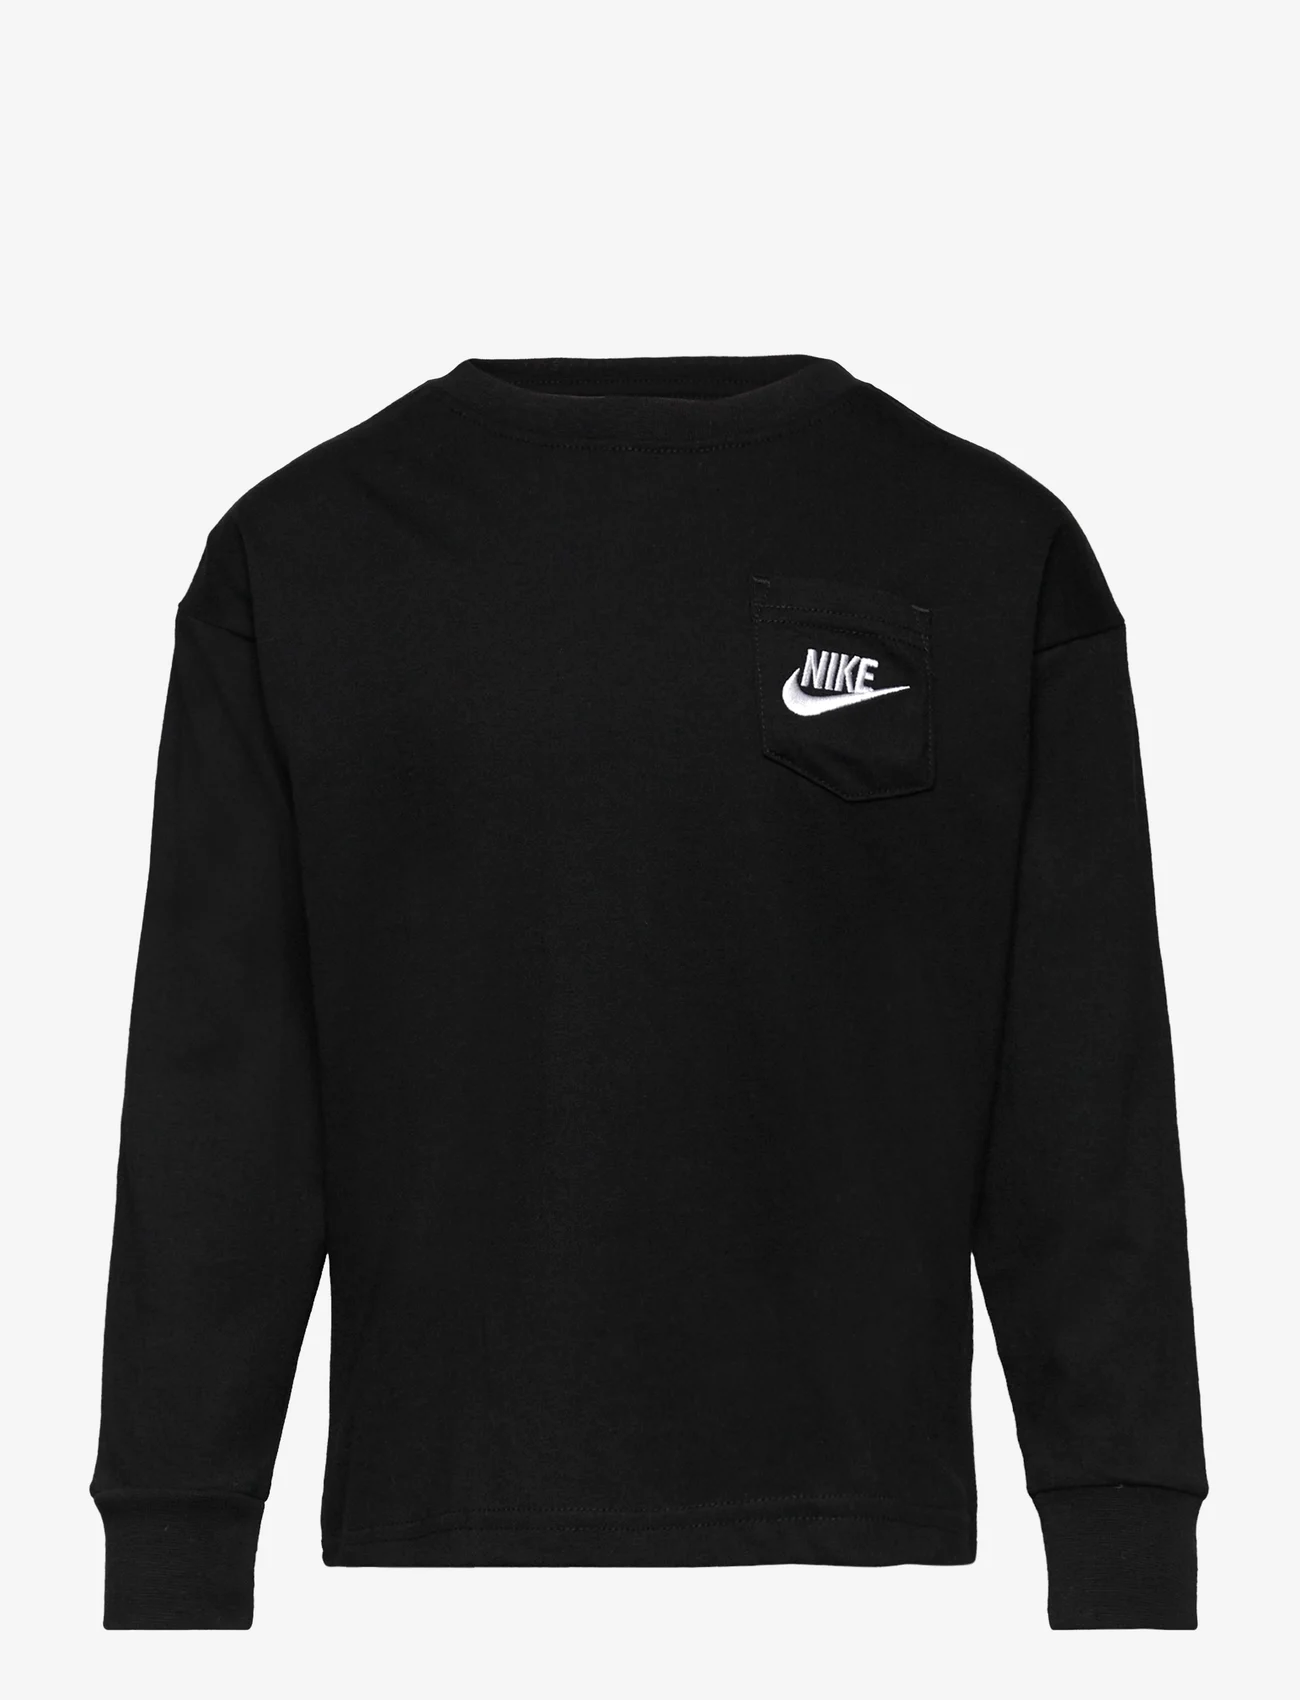 Nike - NSW RELAXED LS LBR TEE - lange mouwen - black - 0